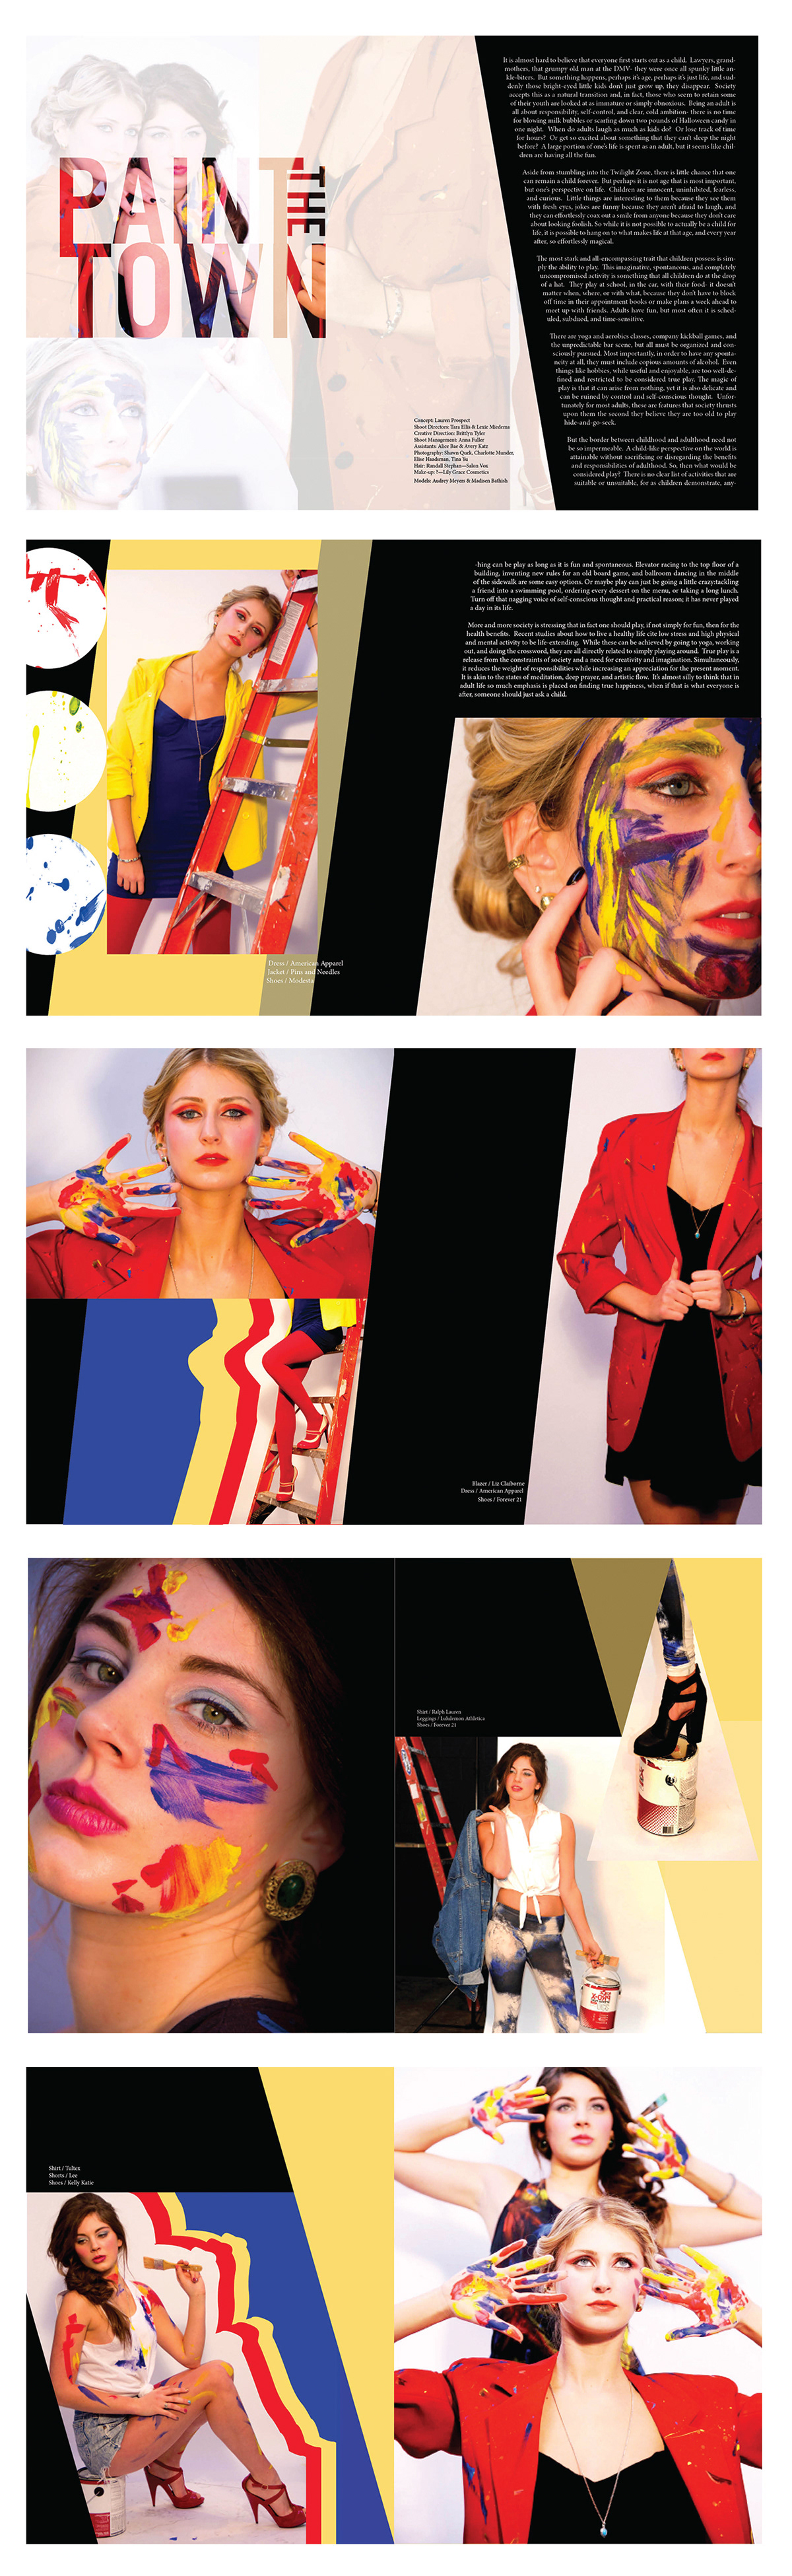 shei magazine InDesign photoshop editorial fashion magazine